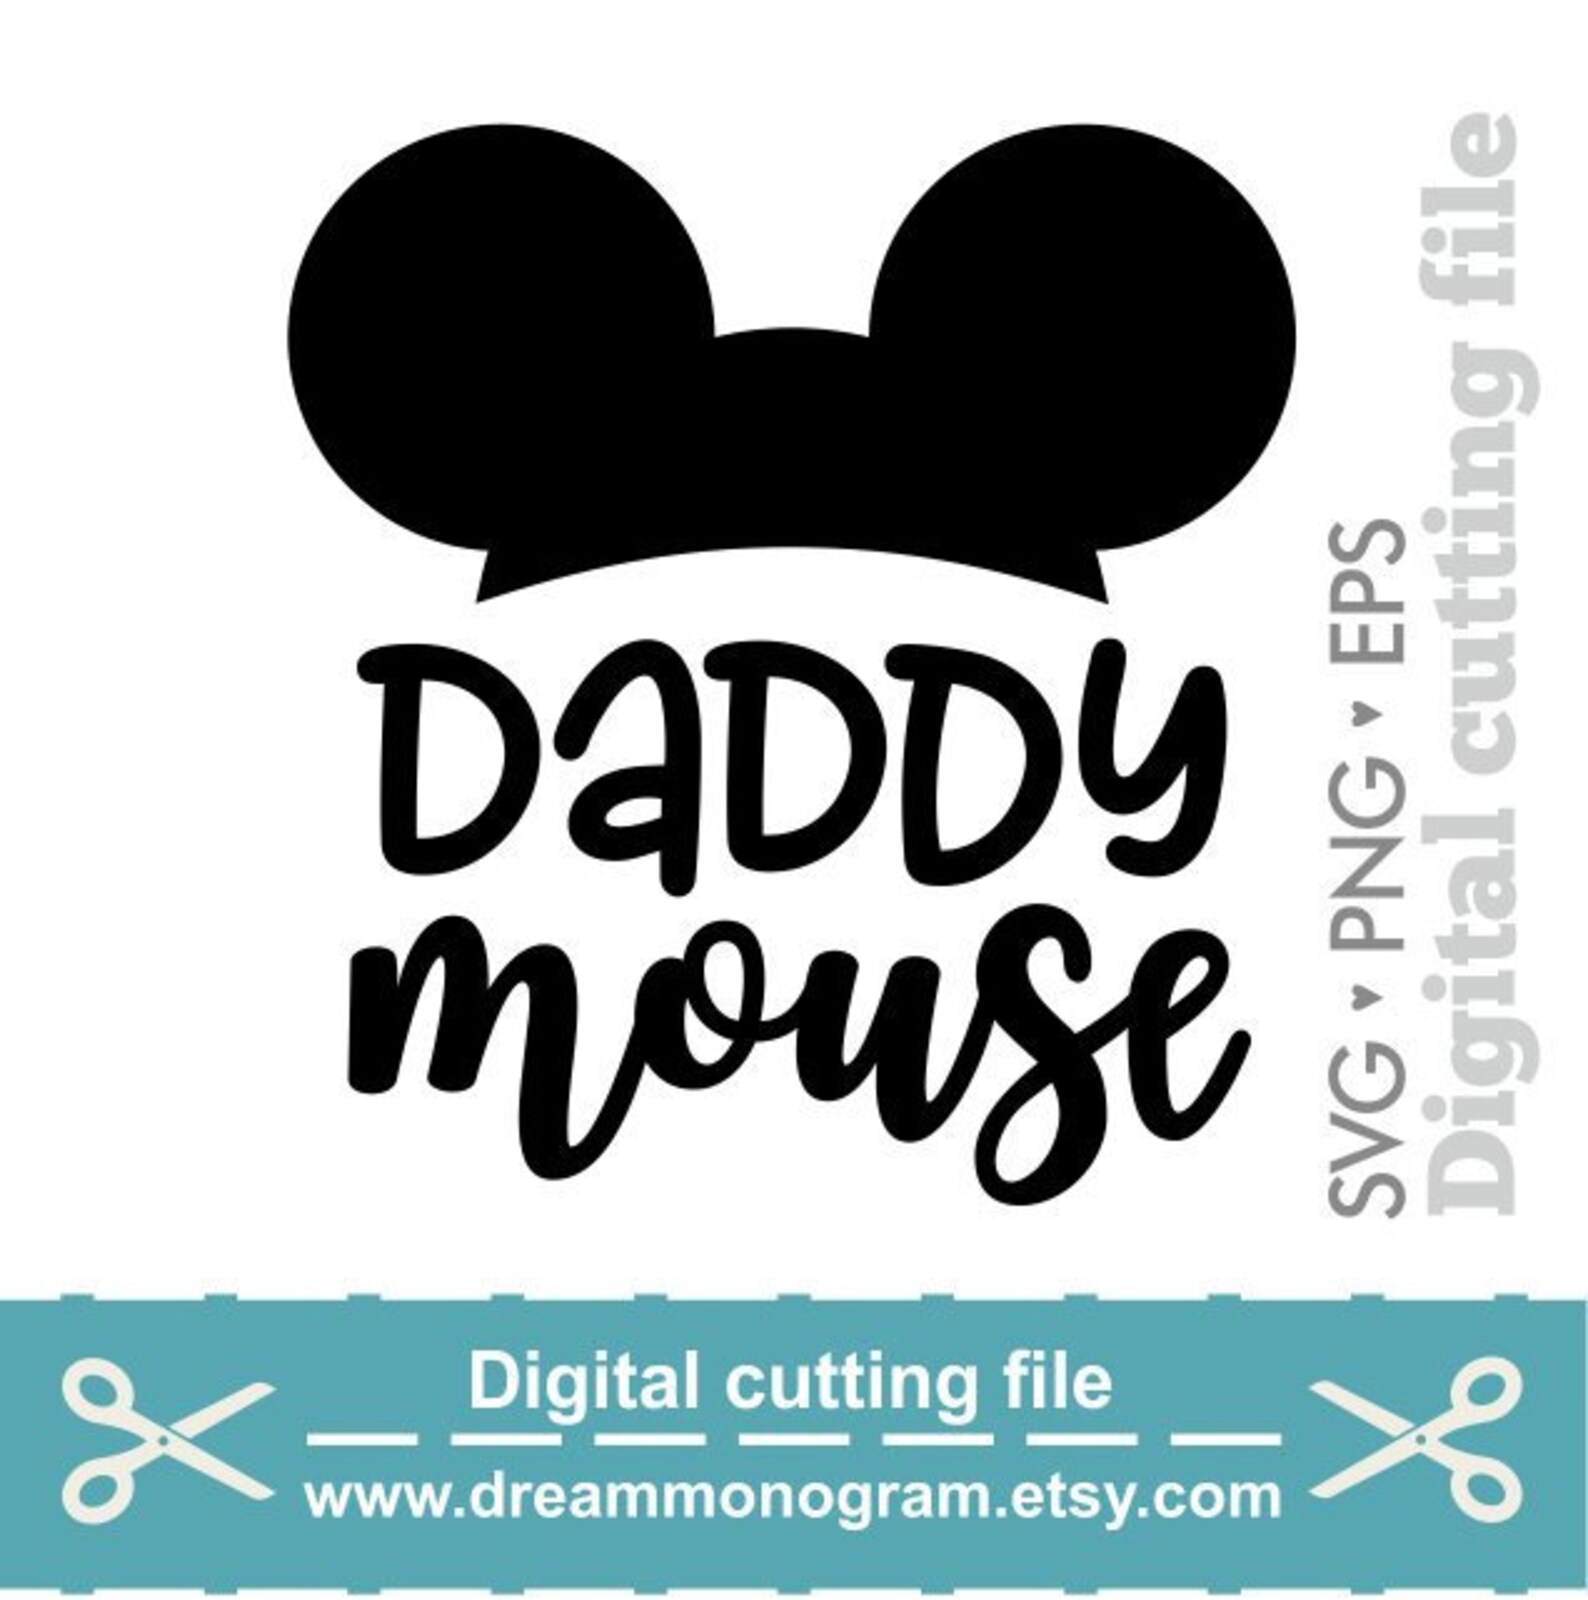 Daddy mouse Svg Papa mouse Svg Mouse Svg Daddy Svg Bow image 0.